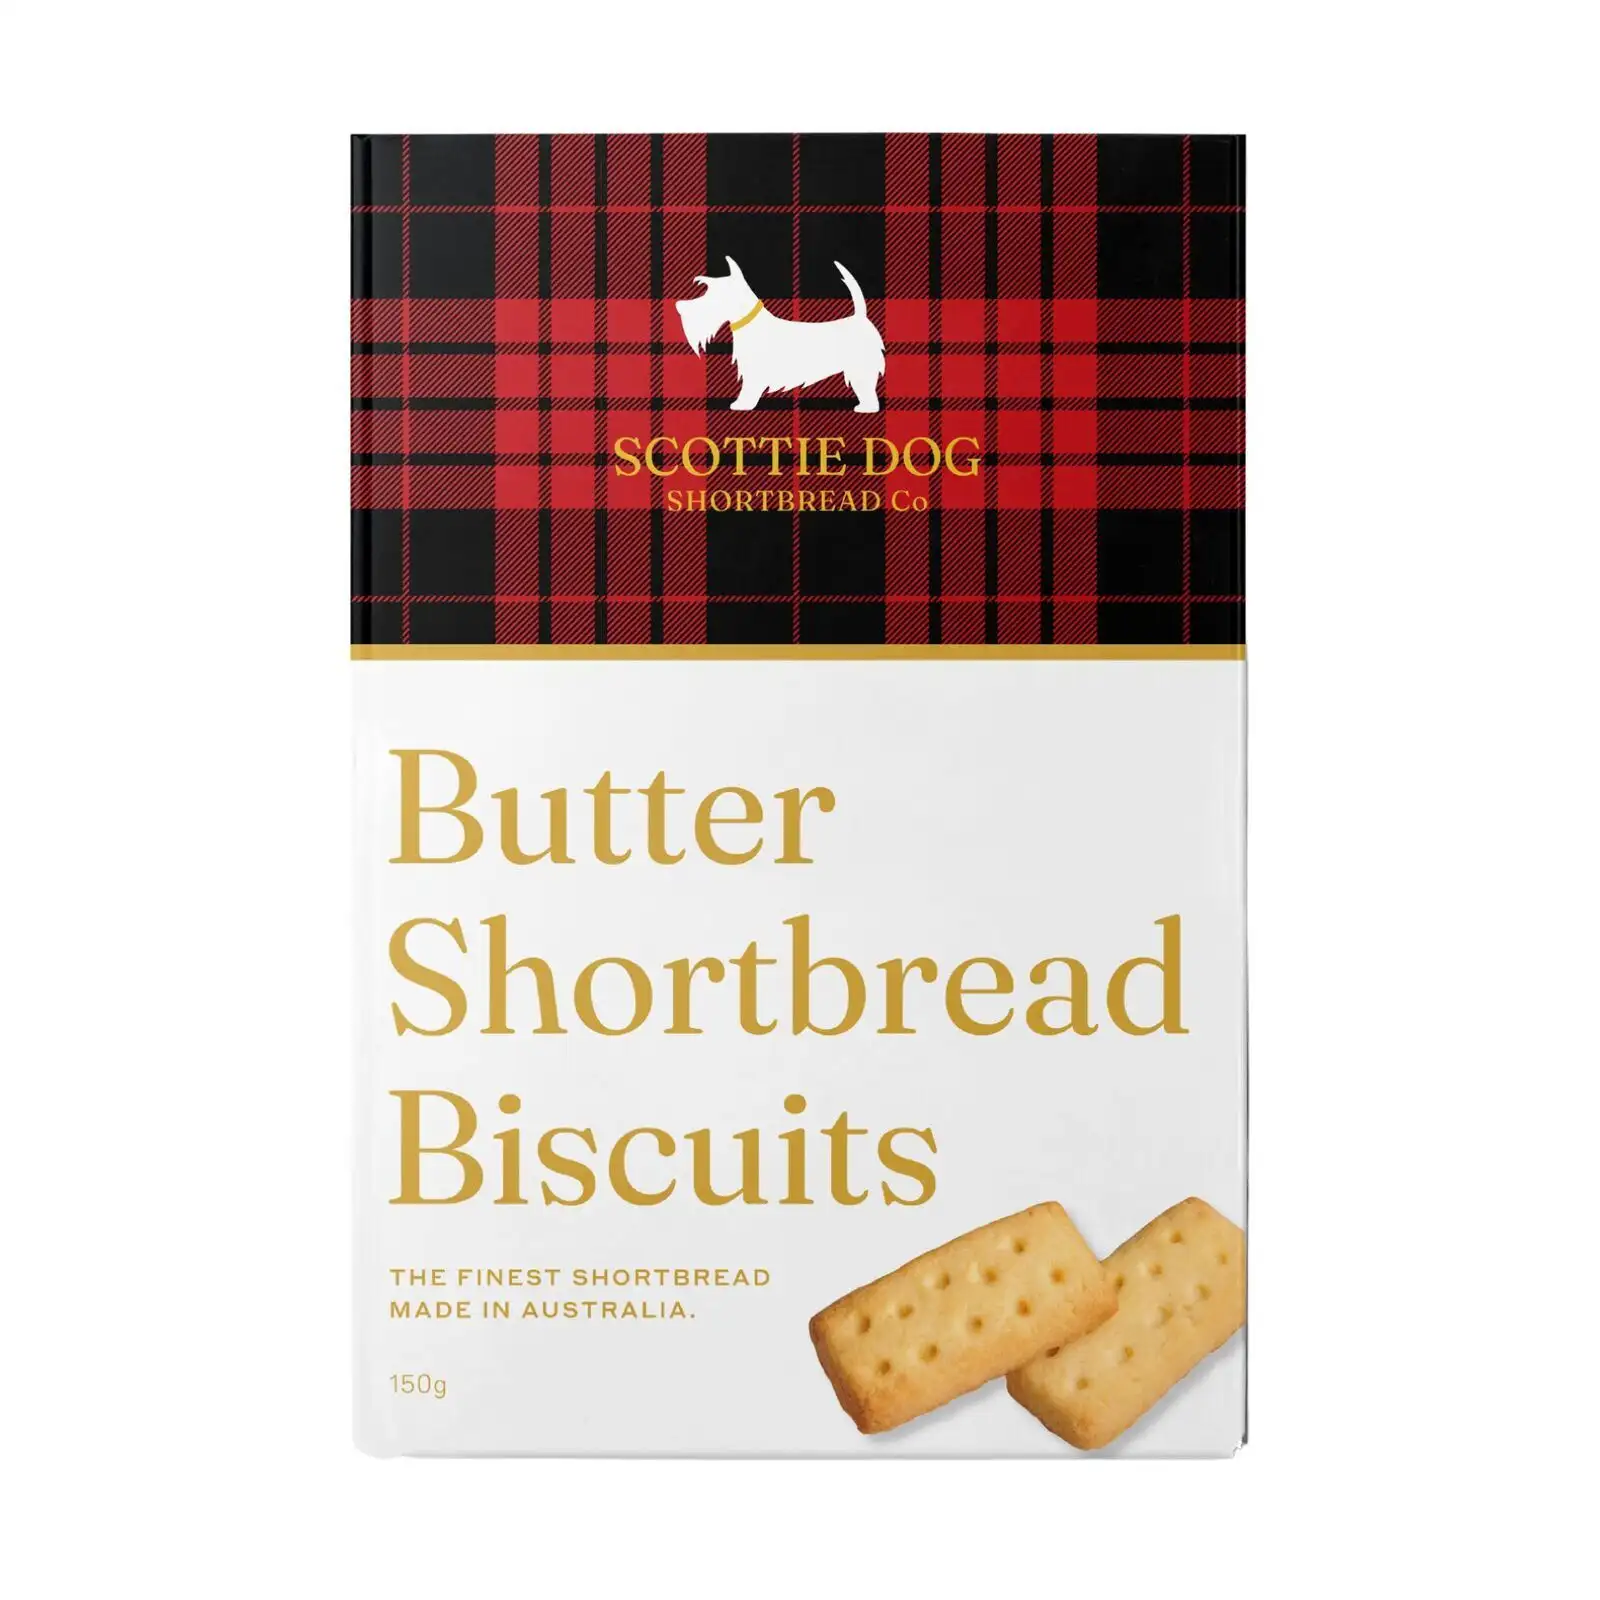 Scottie Dog Shortbread Co Butter Shortbread Biscuits (150g)